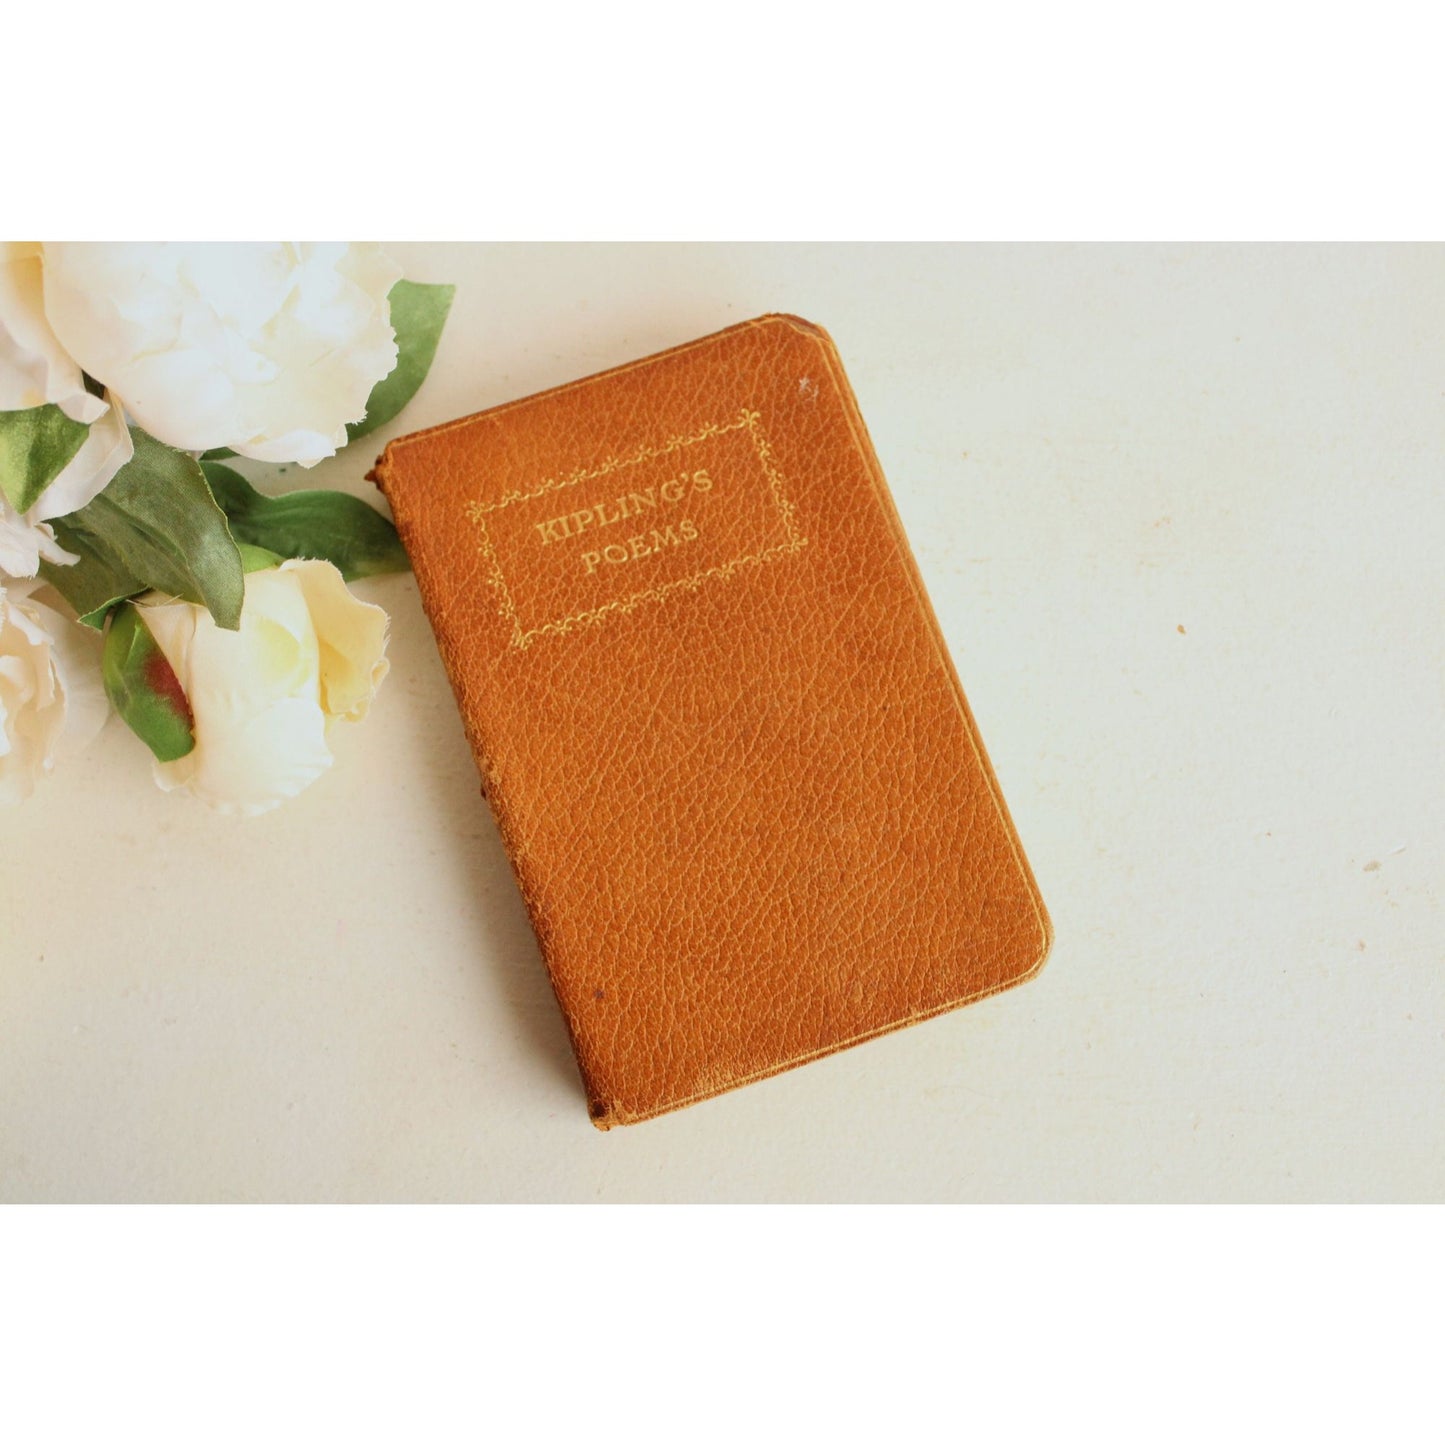 Vintage Antique 1920s Book, "The Poems of Rudyard Kipling"